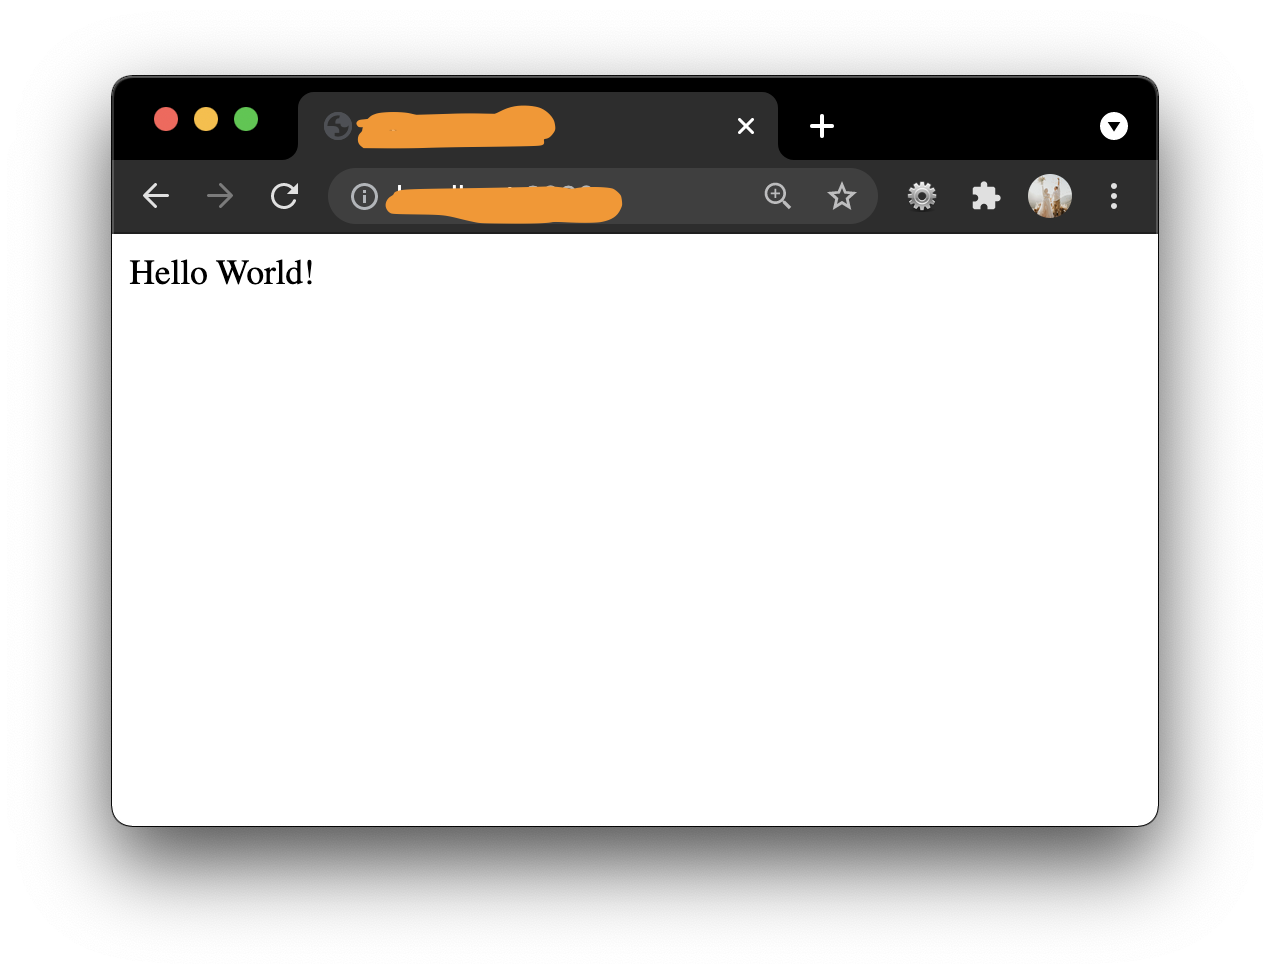 Running node script in browser